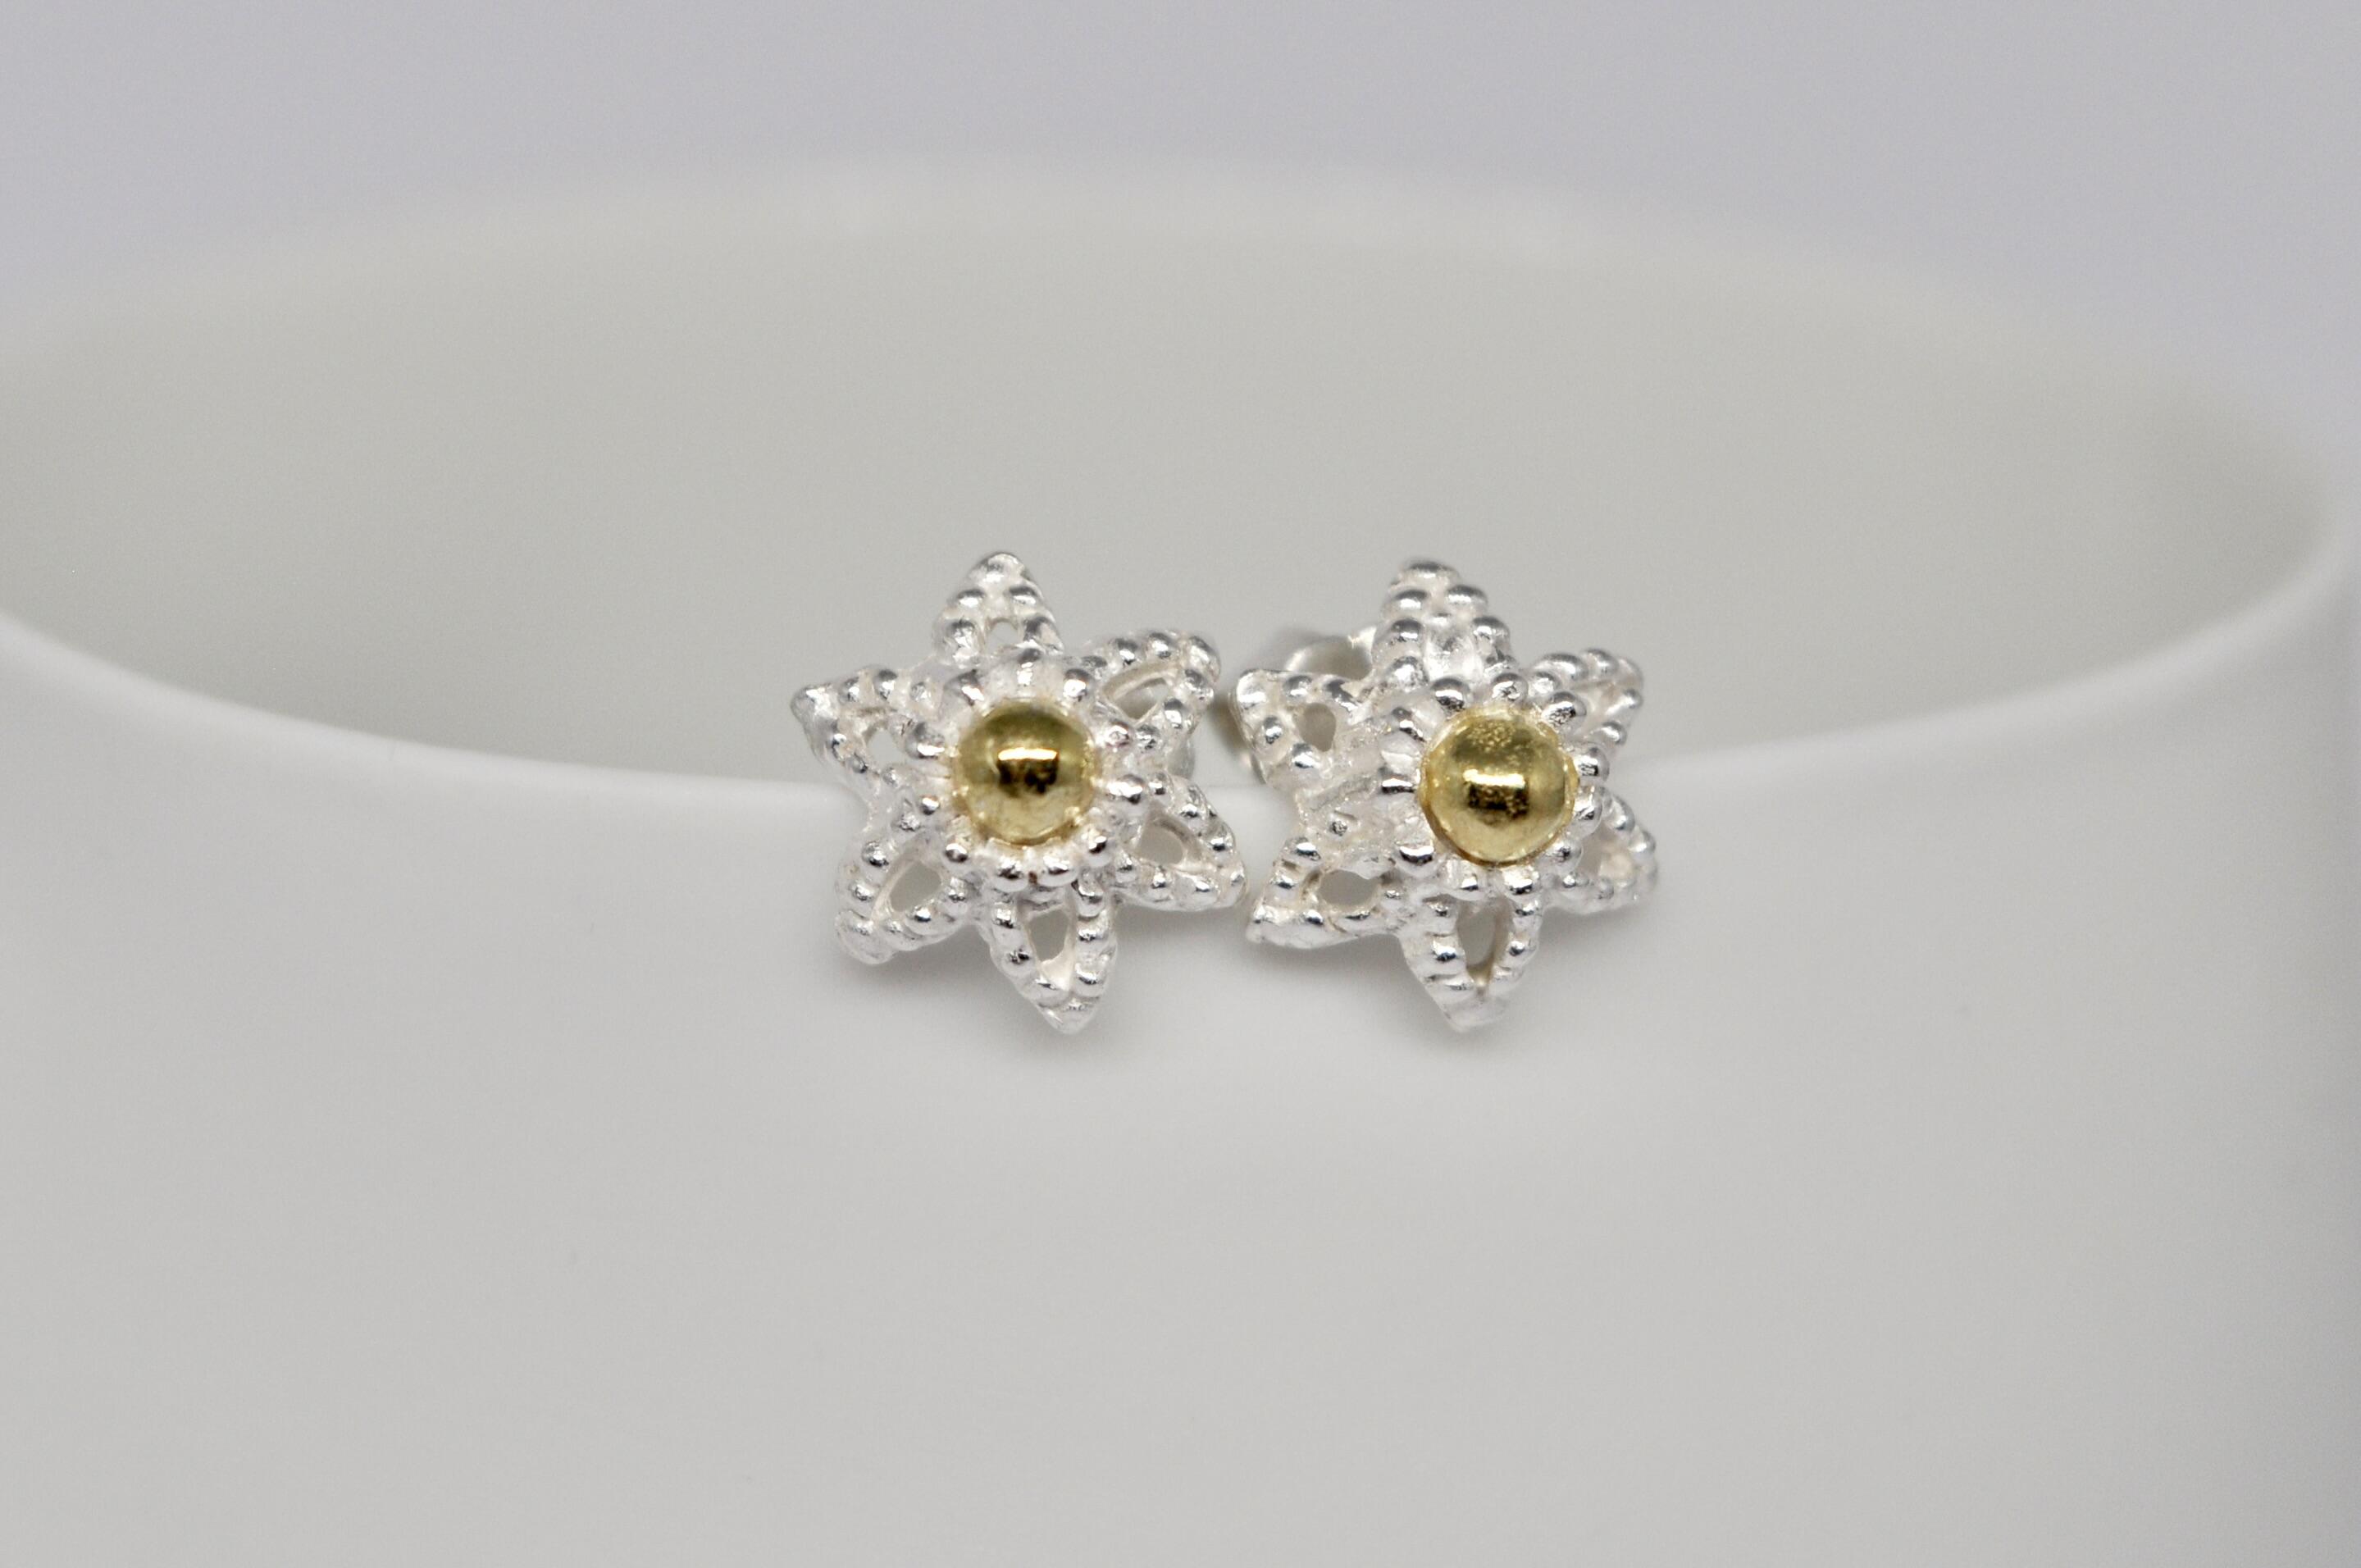 Dainty flower earrings in silver and gold